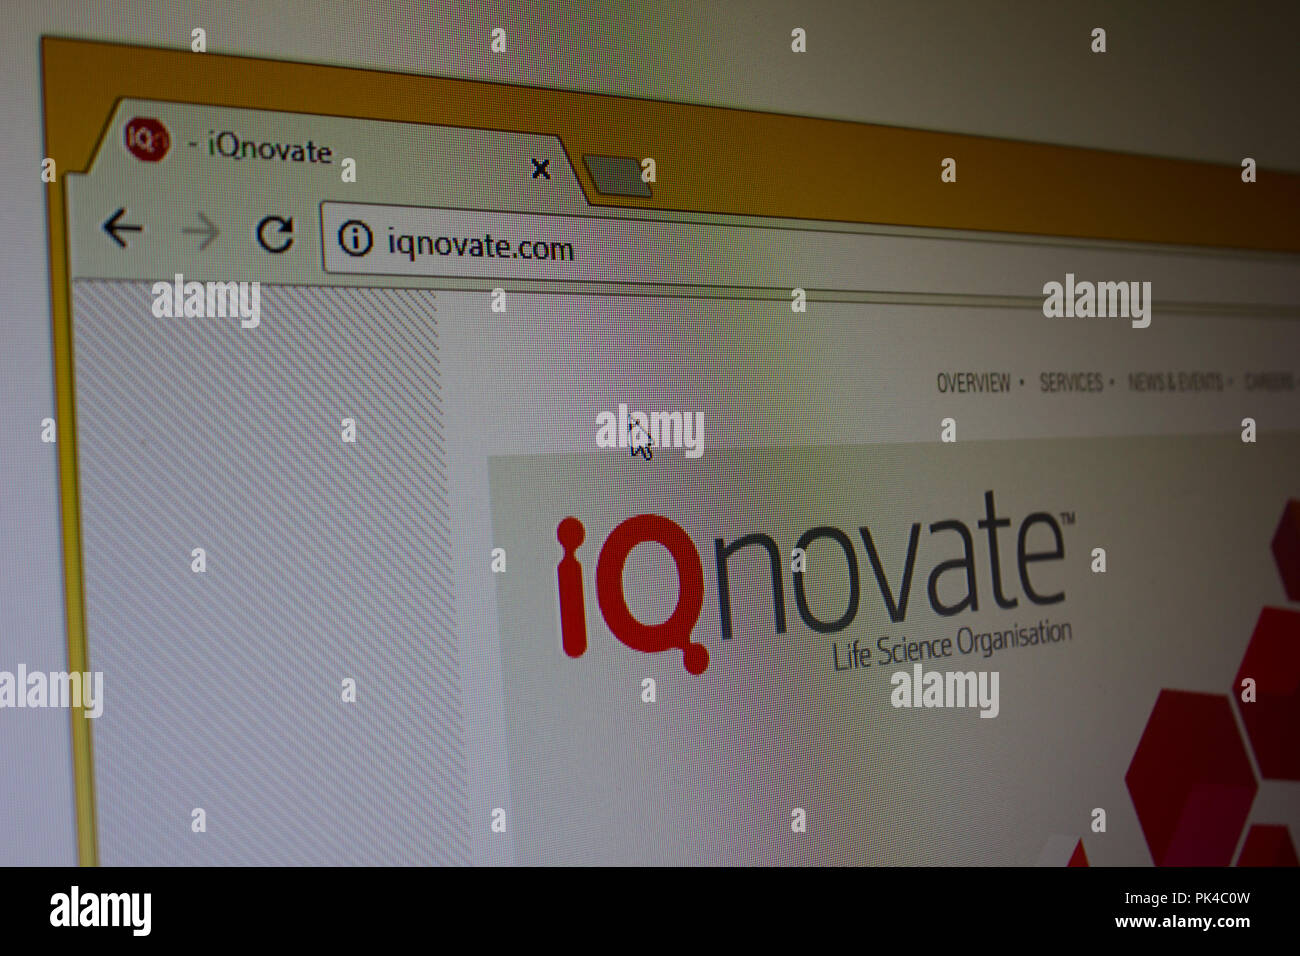 iQnovate Website Homepage Stock Photo